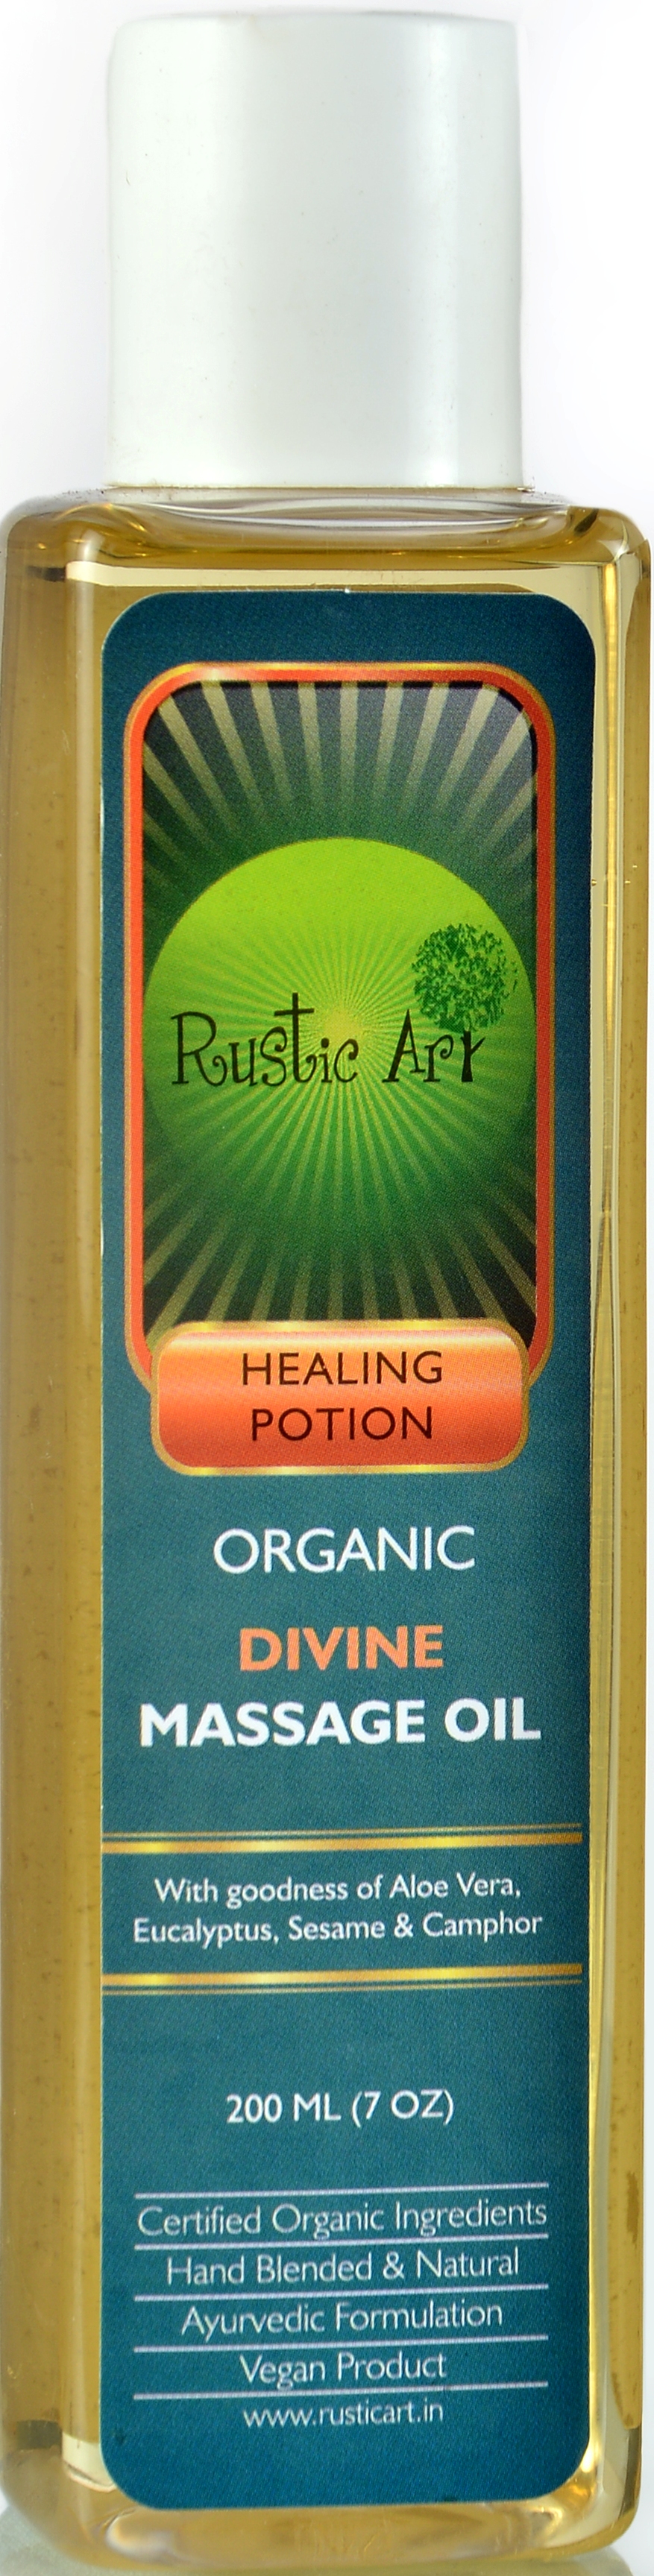 Buy Rustic Art Organic Divine Massage Oil at Best Price Online